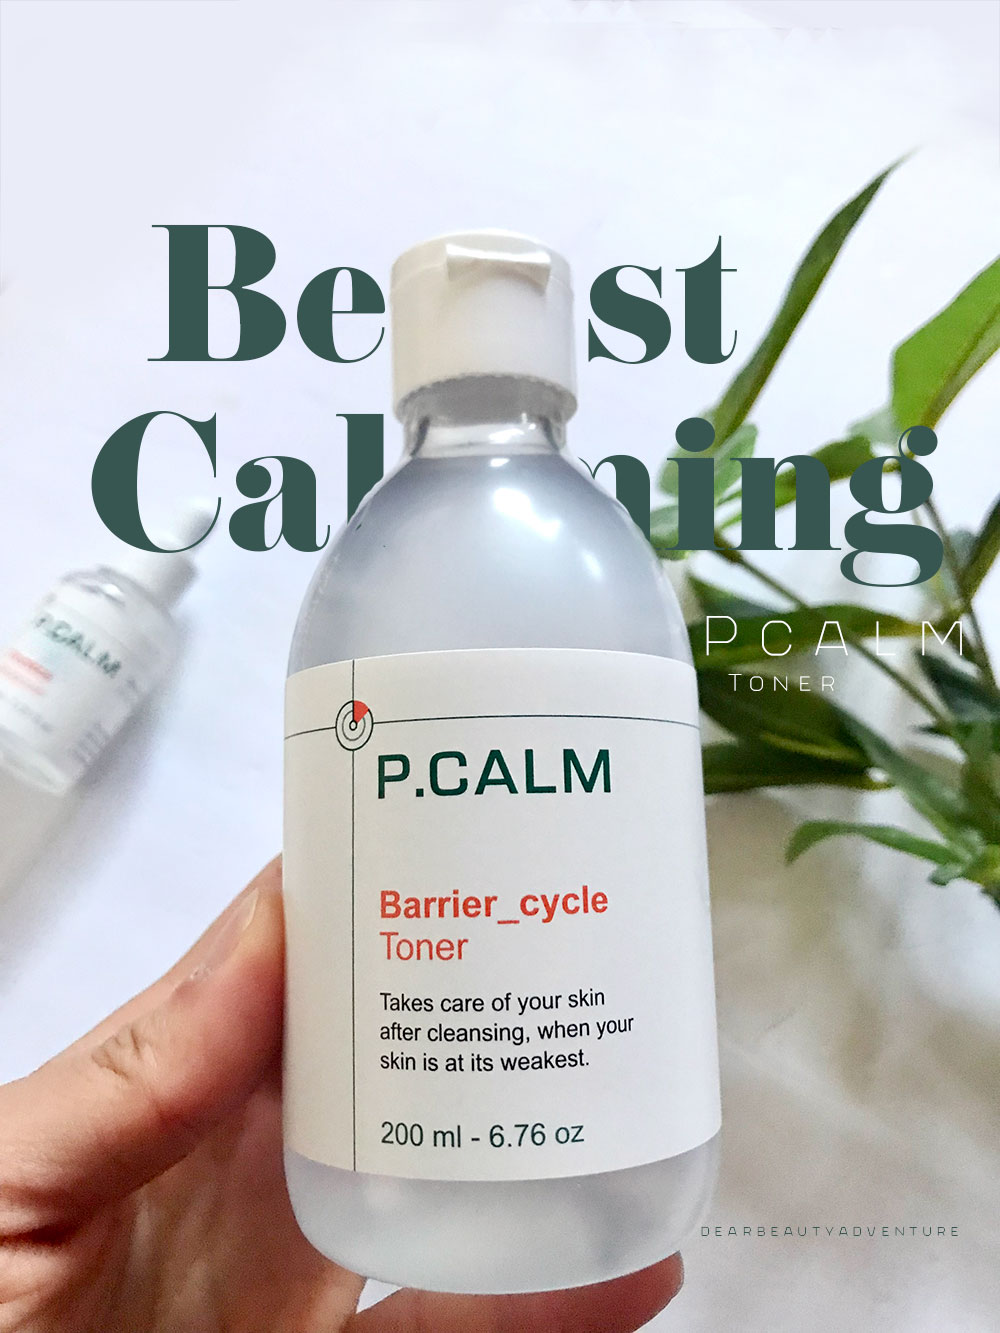 best calming product p.calm toner review